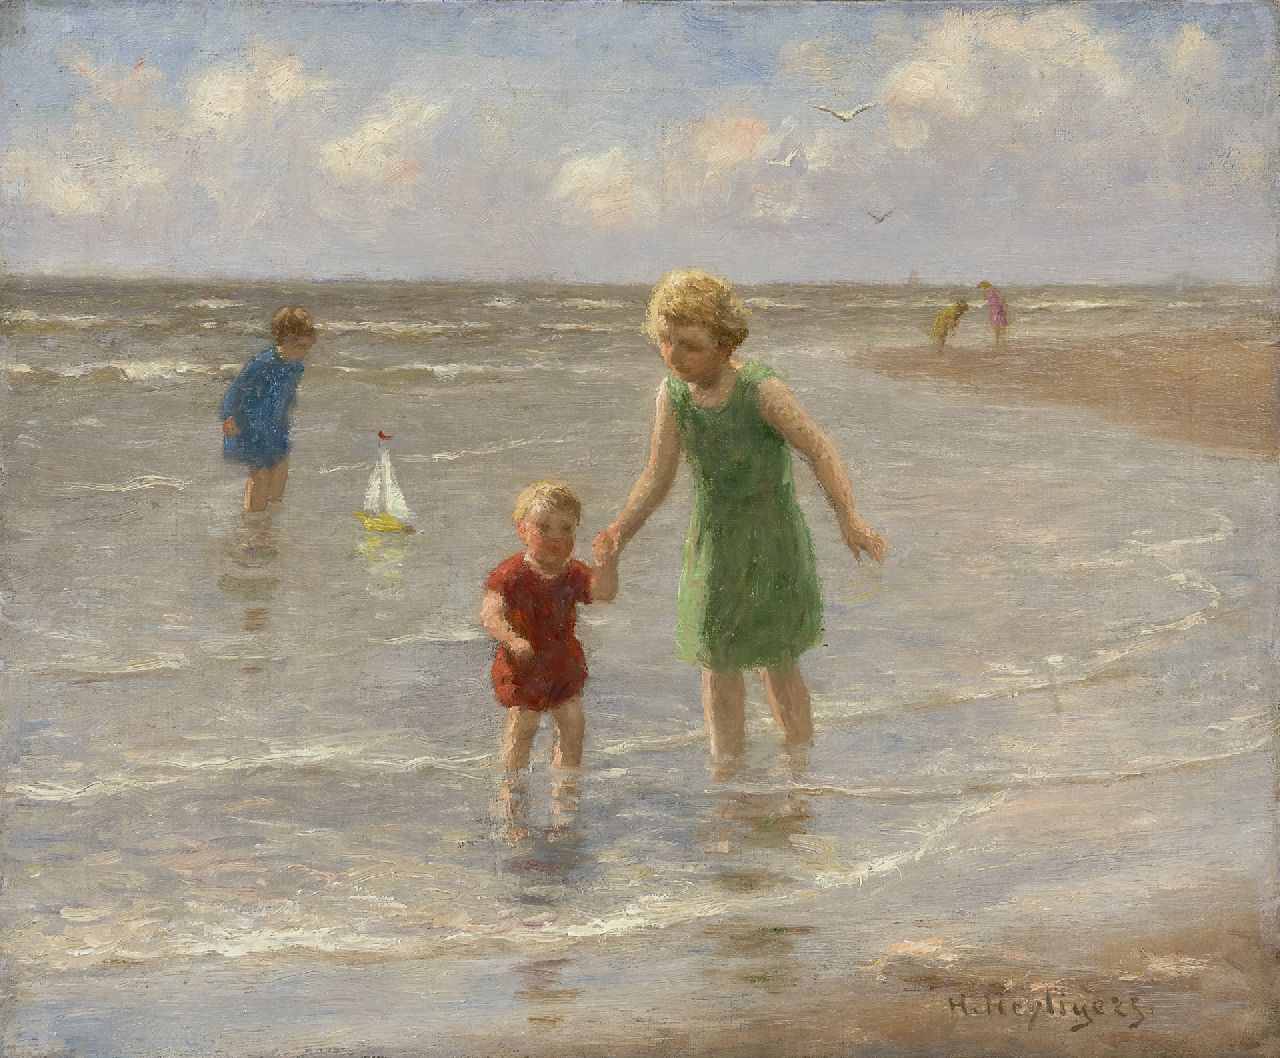 Heijligers H.  | Hendrik 'Henri' Heijligers, Children paddling along the beach, oil on canvas 38.1 x 46.0 cm, signed l.r.